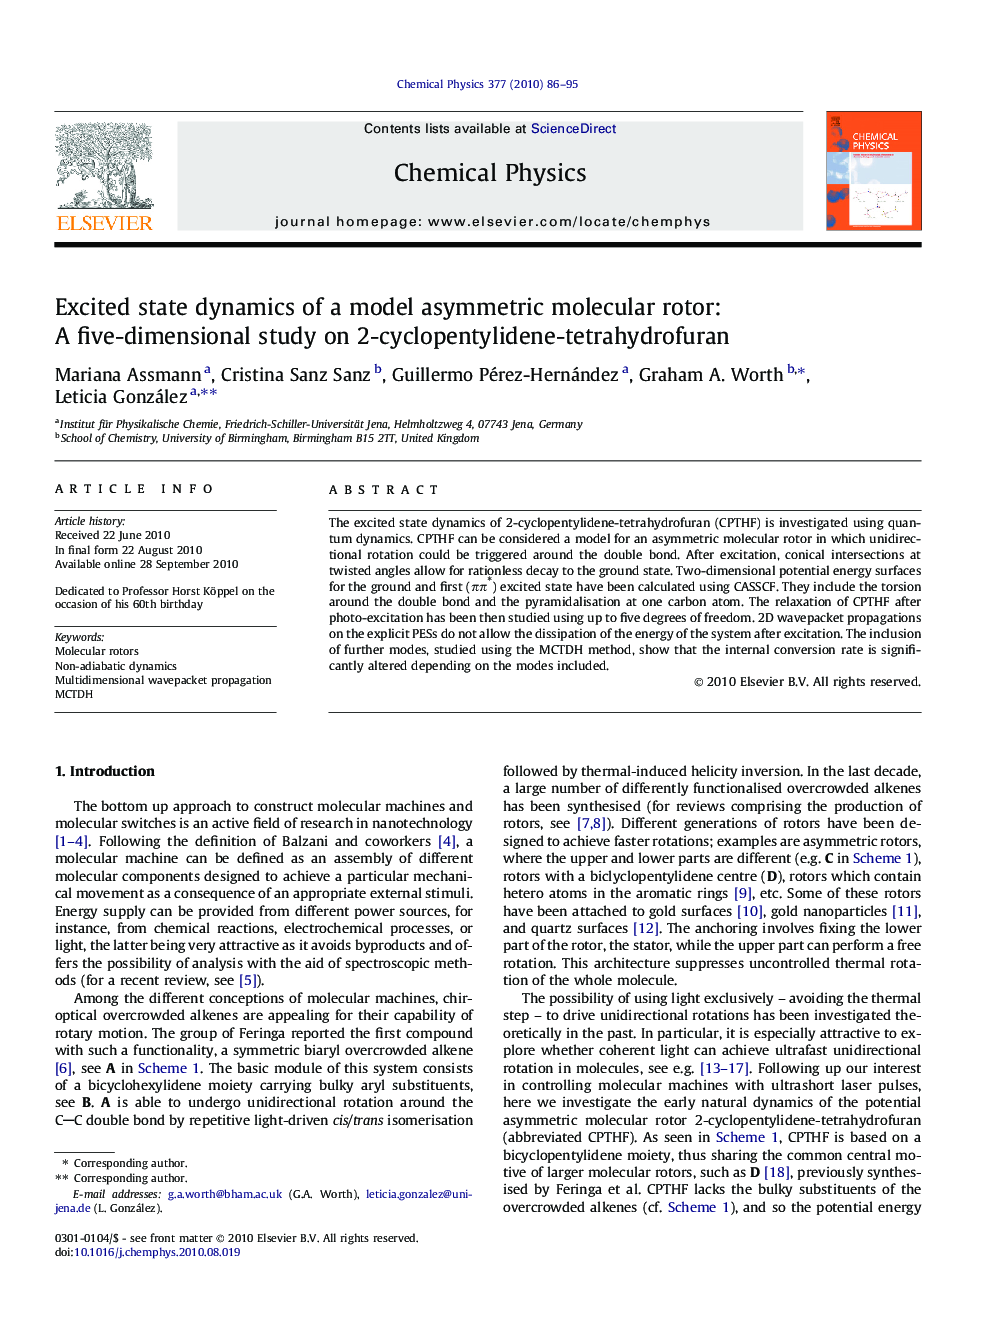 Excited state dynamics of a model asymmetric molecular rotor: A five-dimensional study on 2-cyclopentylidene-tetrahydrofuran